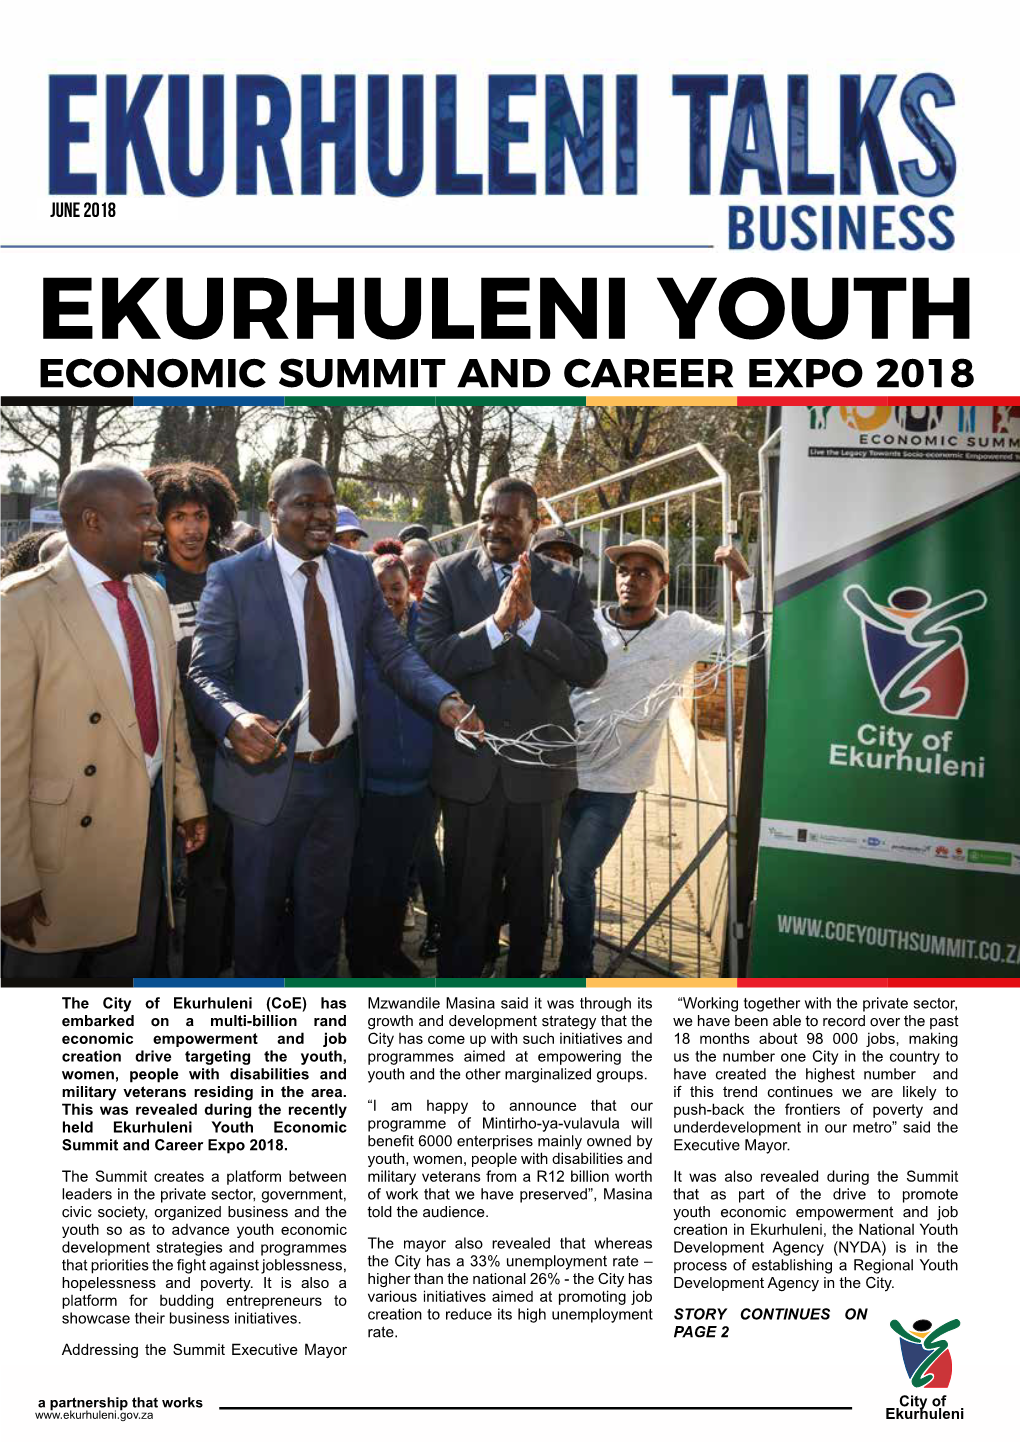 Ekurhuleni Youth Economic Summit and Career Expo 2018